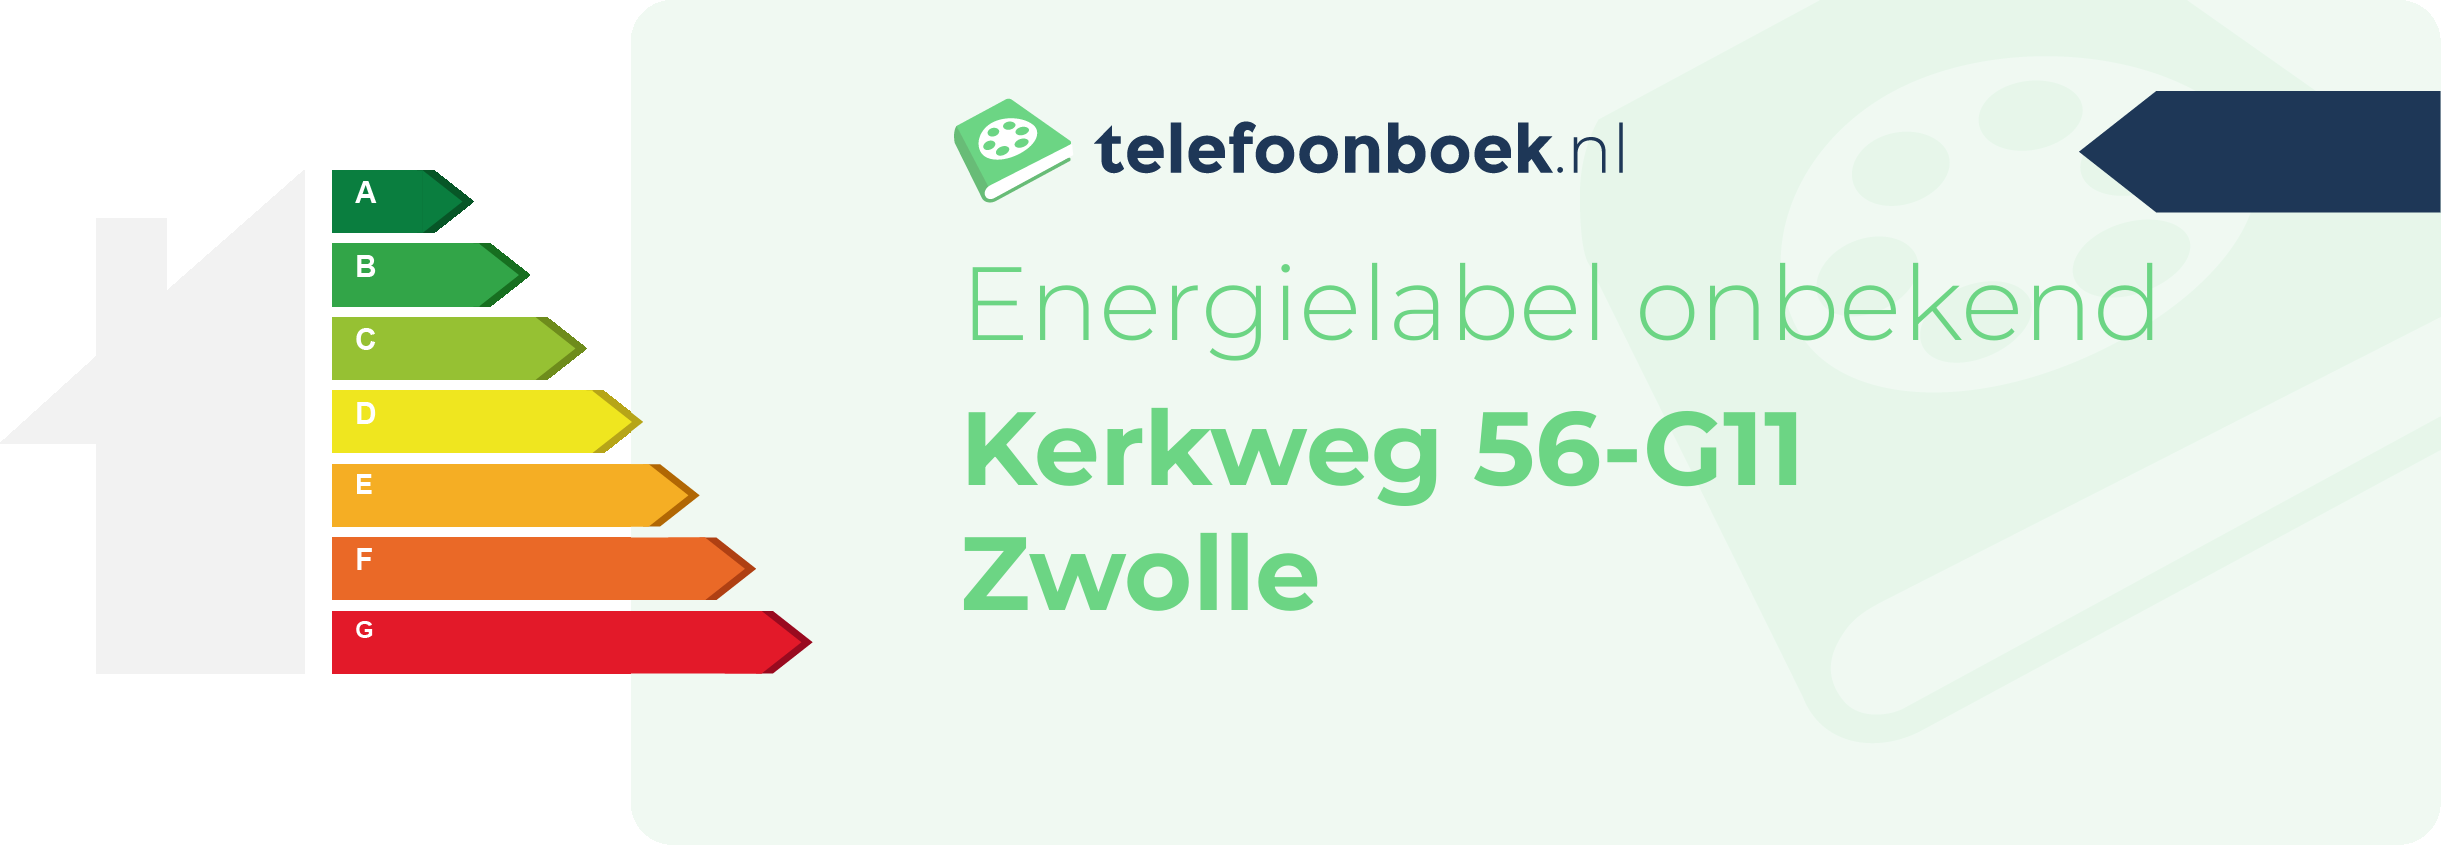 Energielabel Kerkweg 56-G11 Zwolle